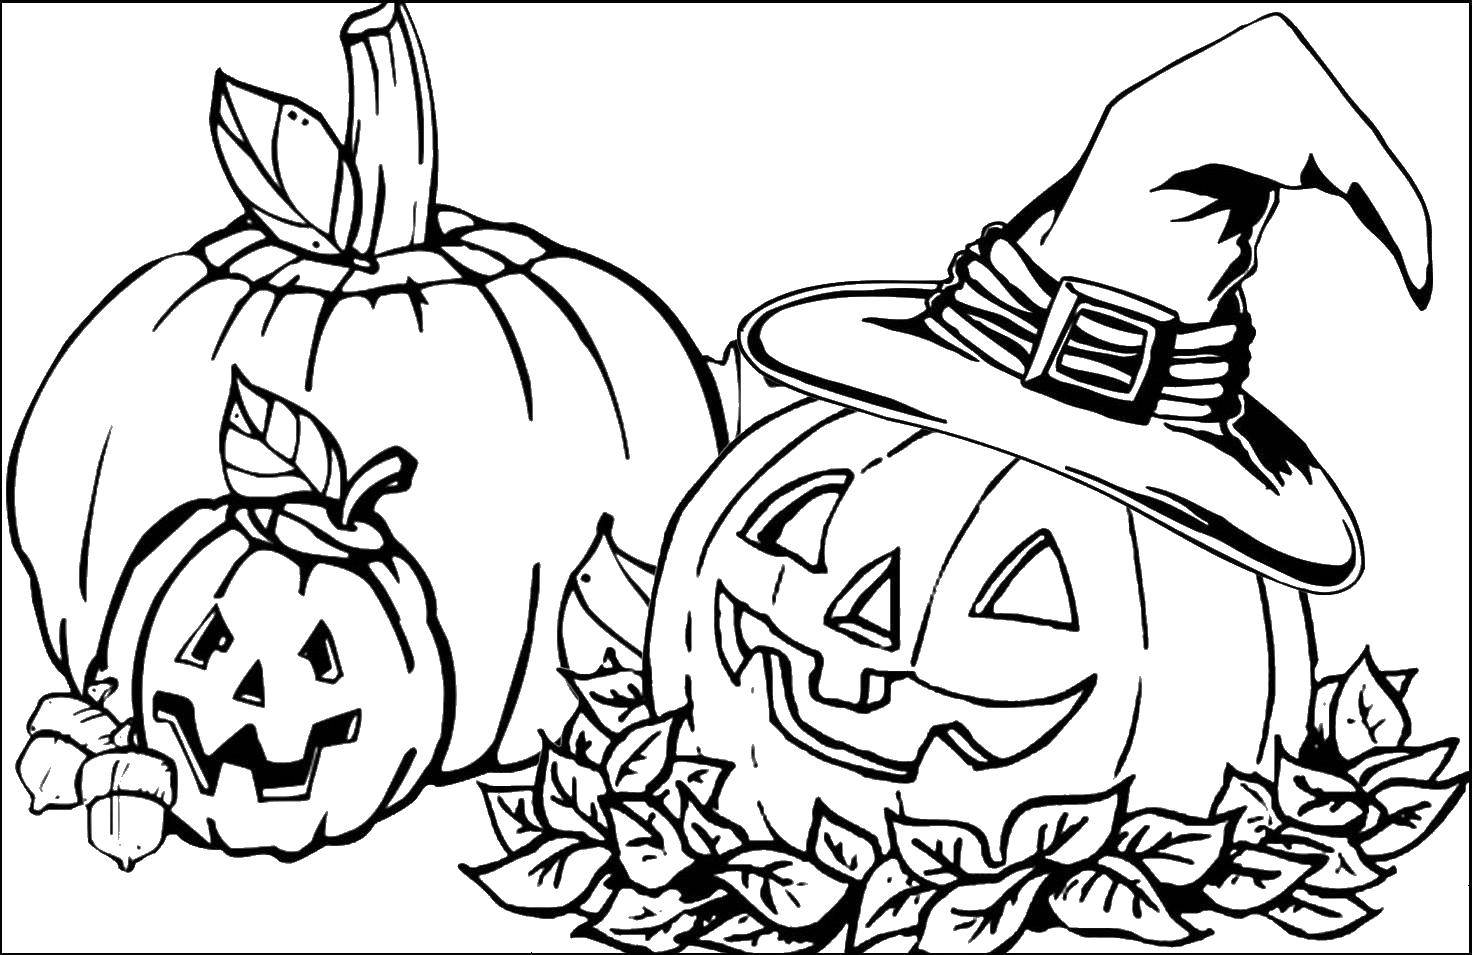 Coloring Pumpkin hats. Category Halloween. Tags:  Halloween, pumpkin.